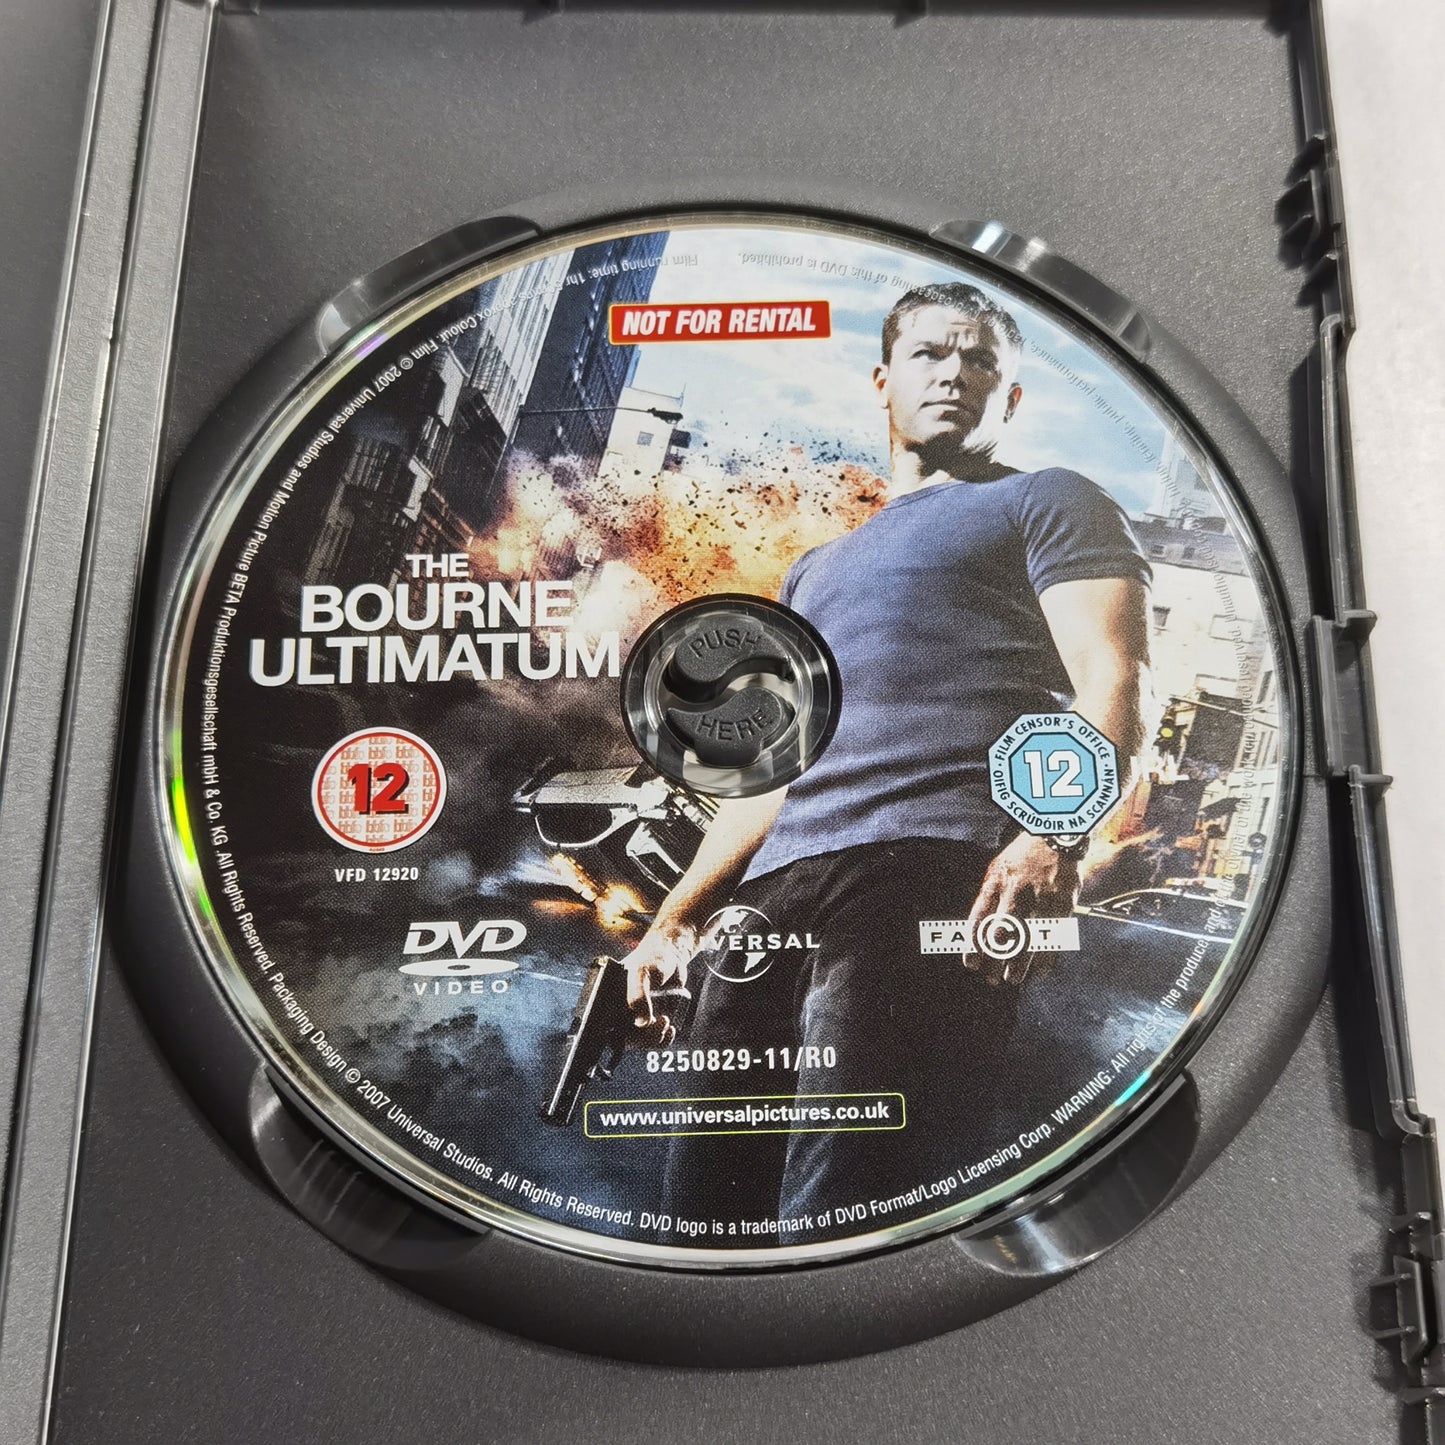 The Bourne Ultimatum (2007) - DVD 5050582508291